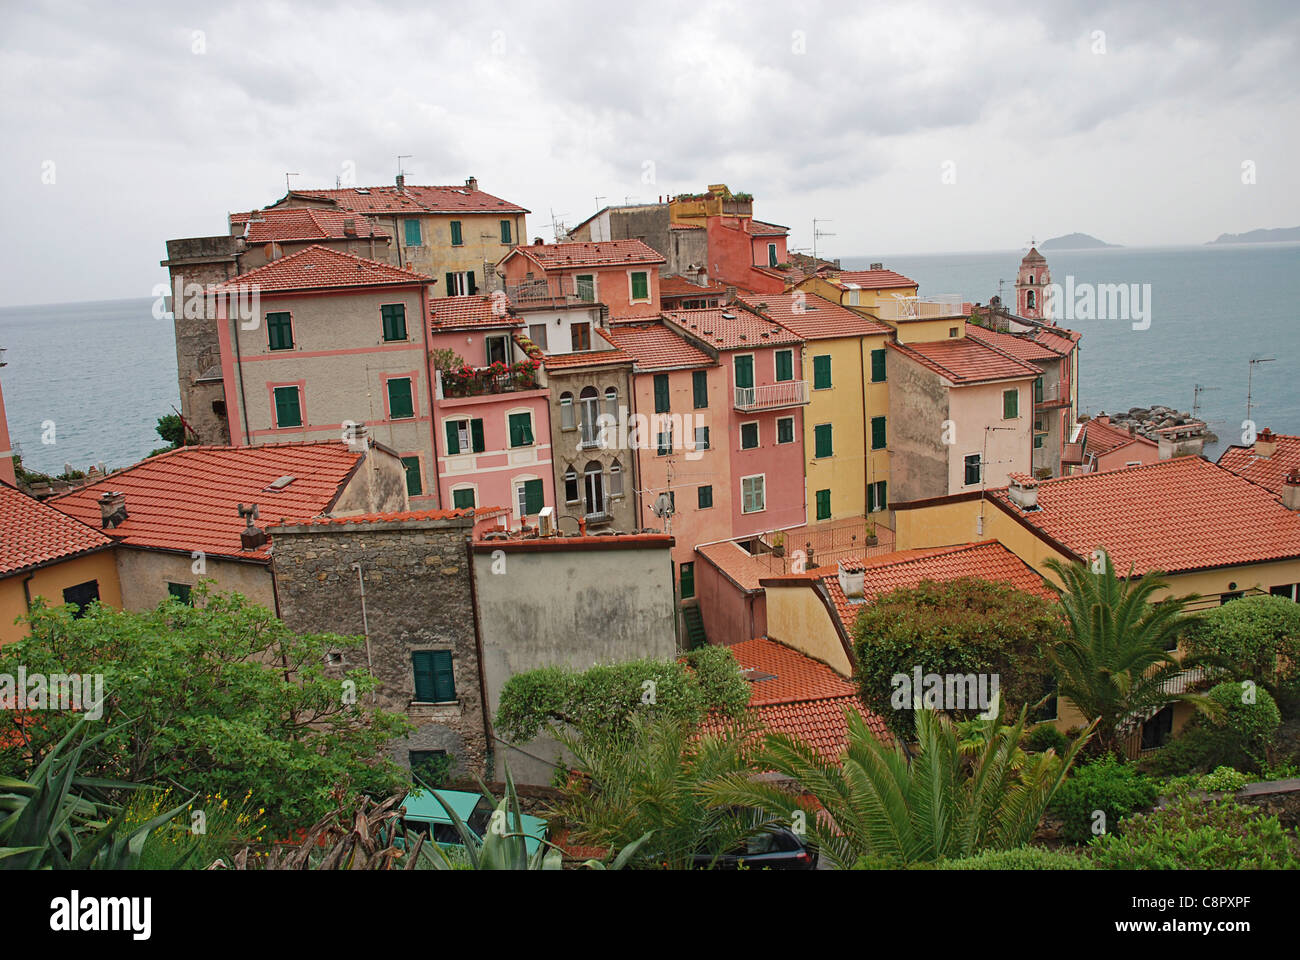 Italy, Liguria, Tellaro, view of village on the Ligurian coast Stock Photo